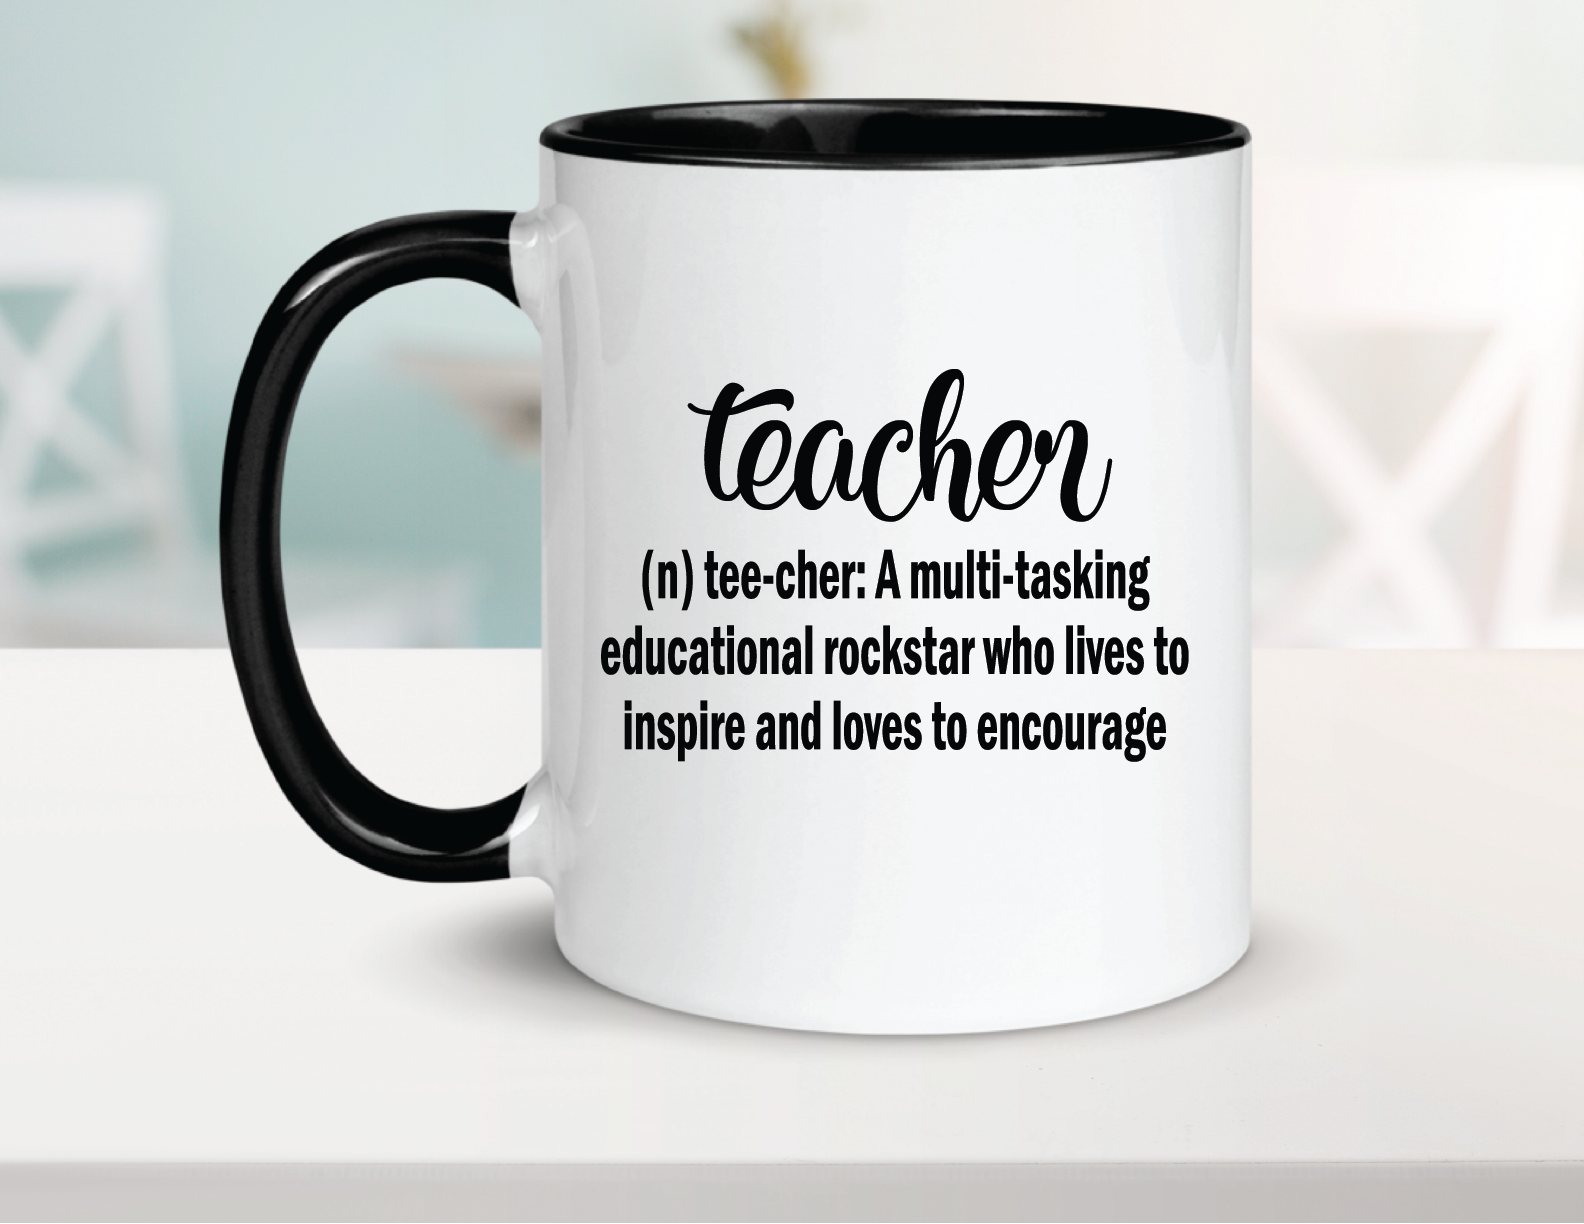 Teacher Definition Ceramic Coffee Mug 15oz